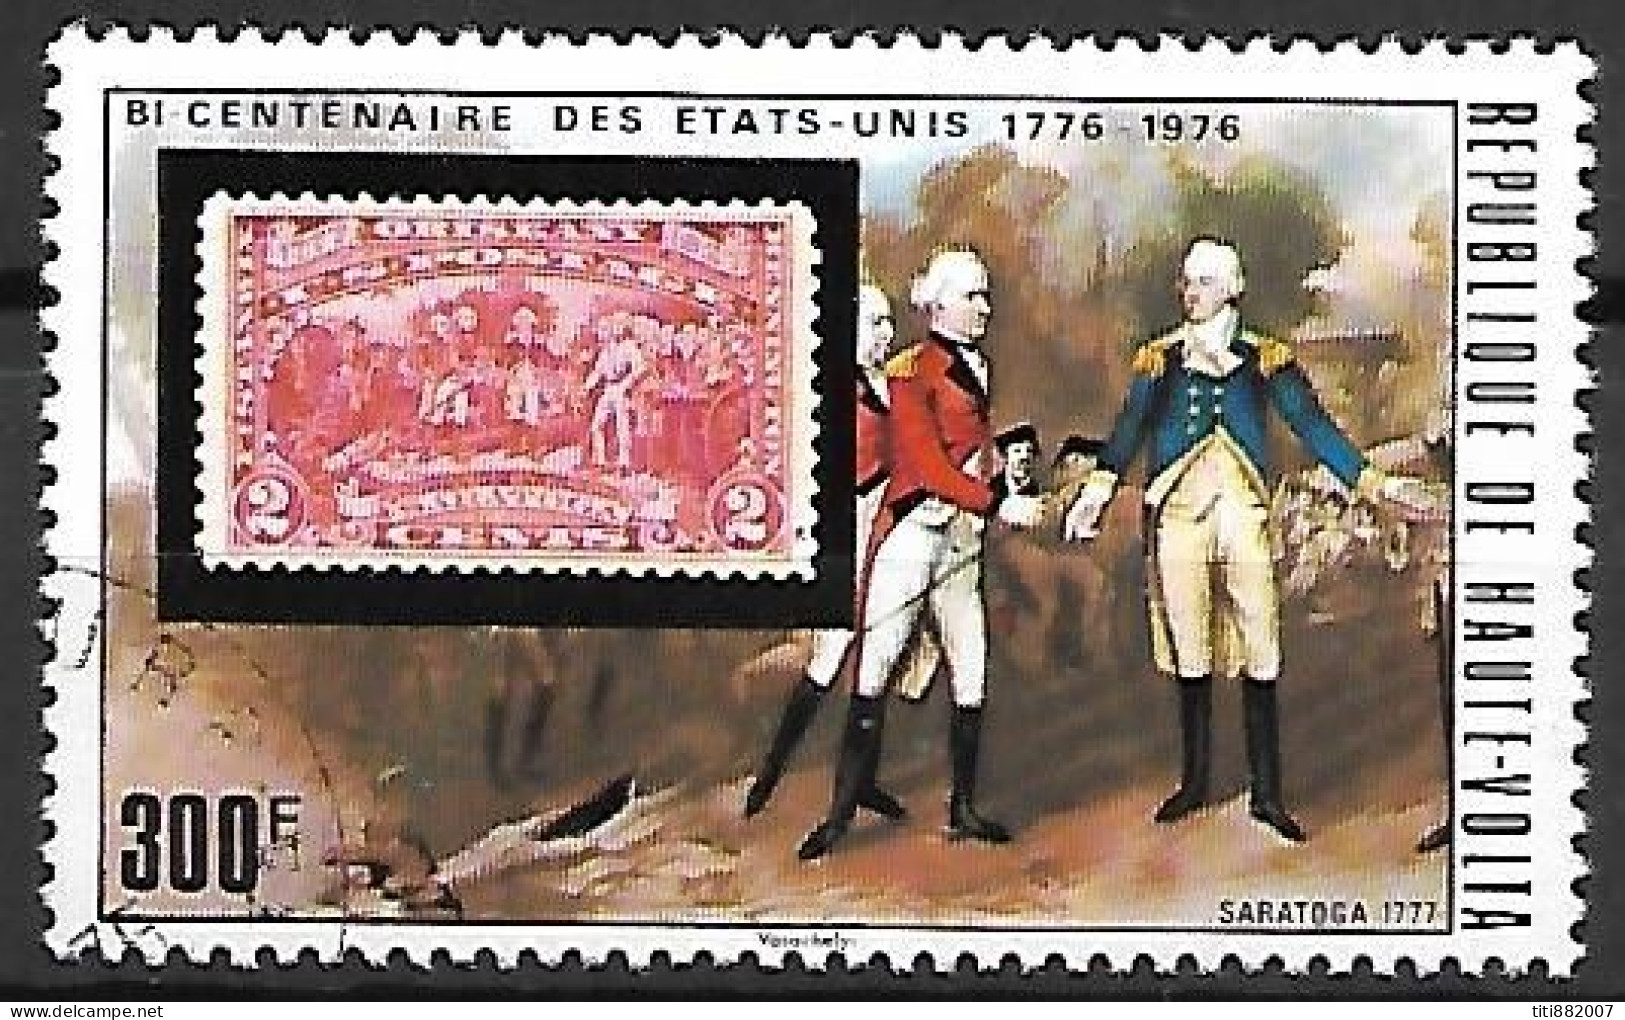 HAUTE  VOLTA    -   Bi Centenaire  Des  Etats-Unis   /   Saratoga 1777  -  Oblitéré - Onafhankelijkheid USA